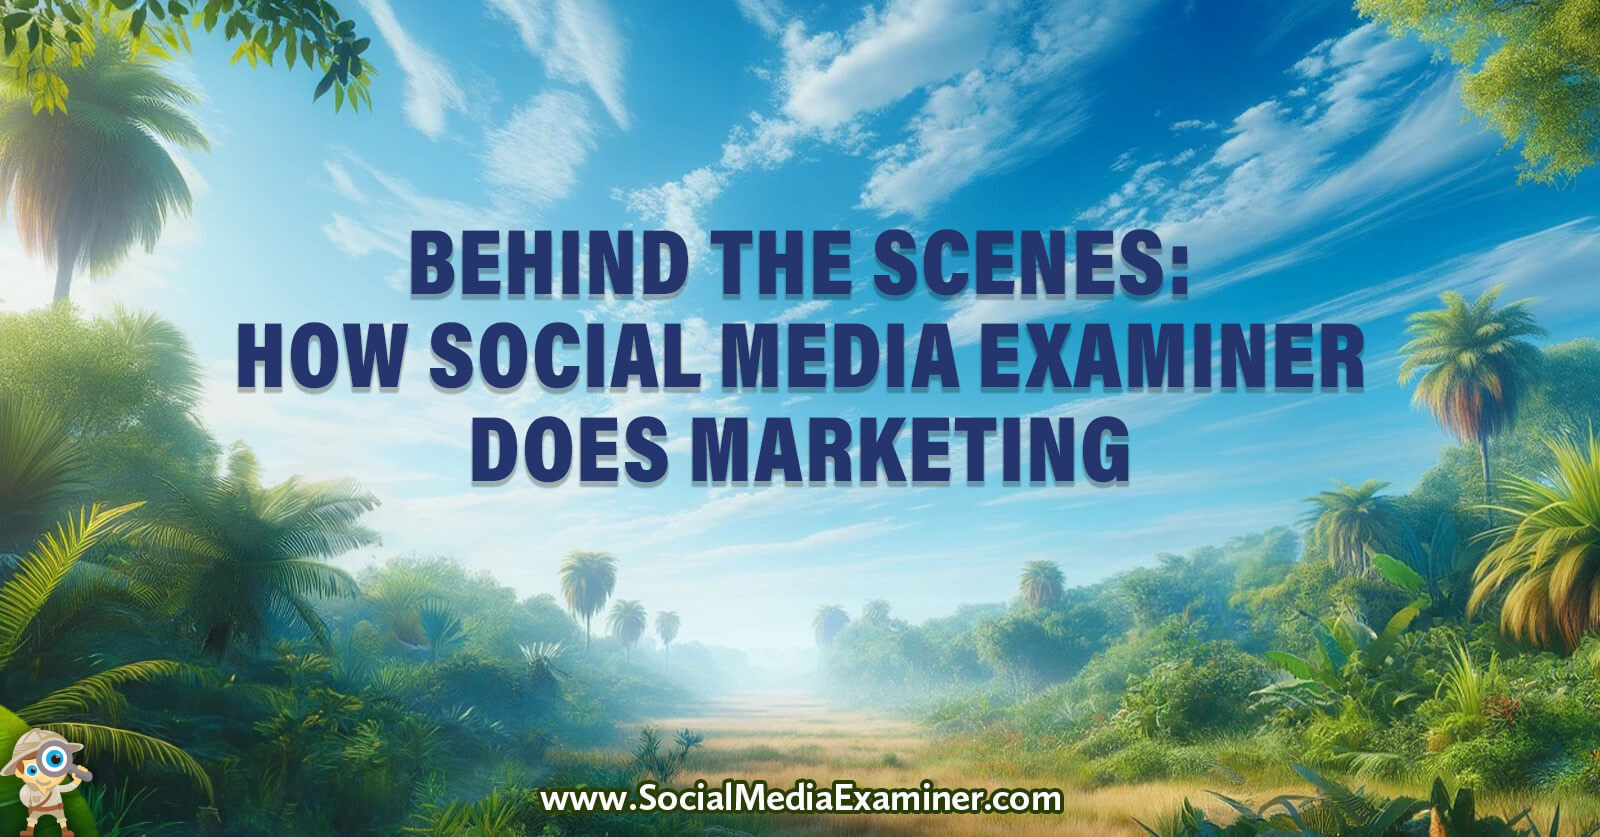 Behind the Scenes: How Social Media Examiner Does Marketing by Social Media Examiner